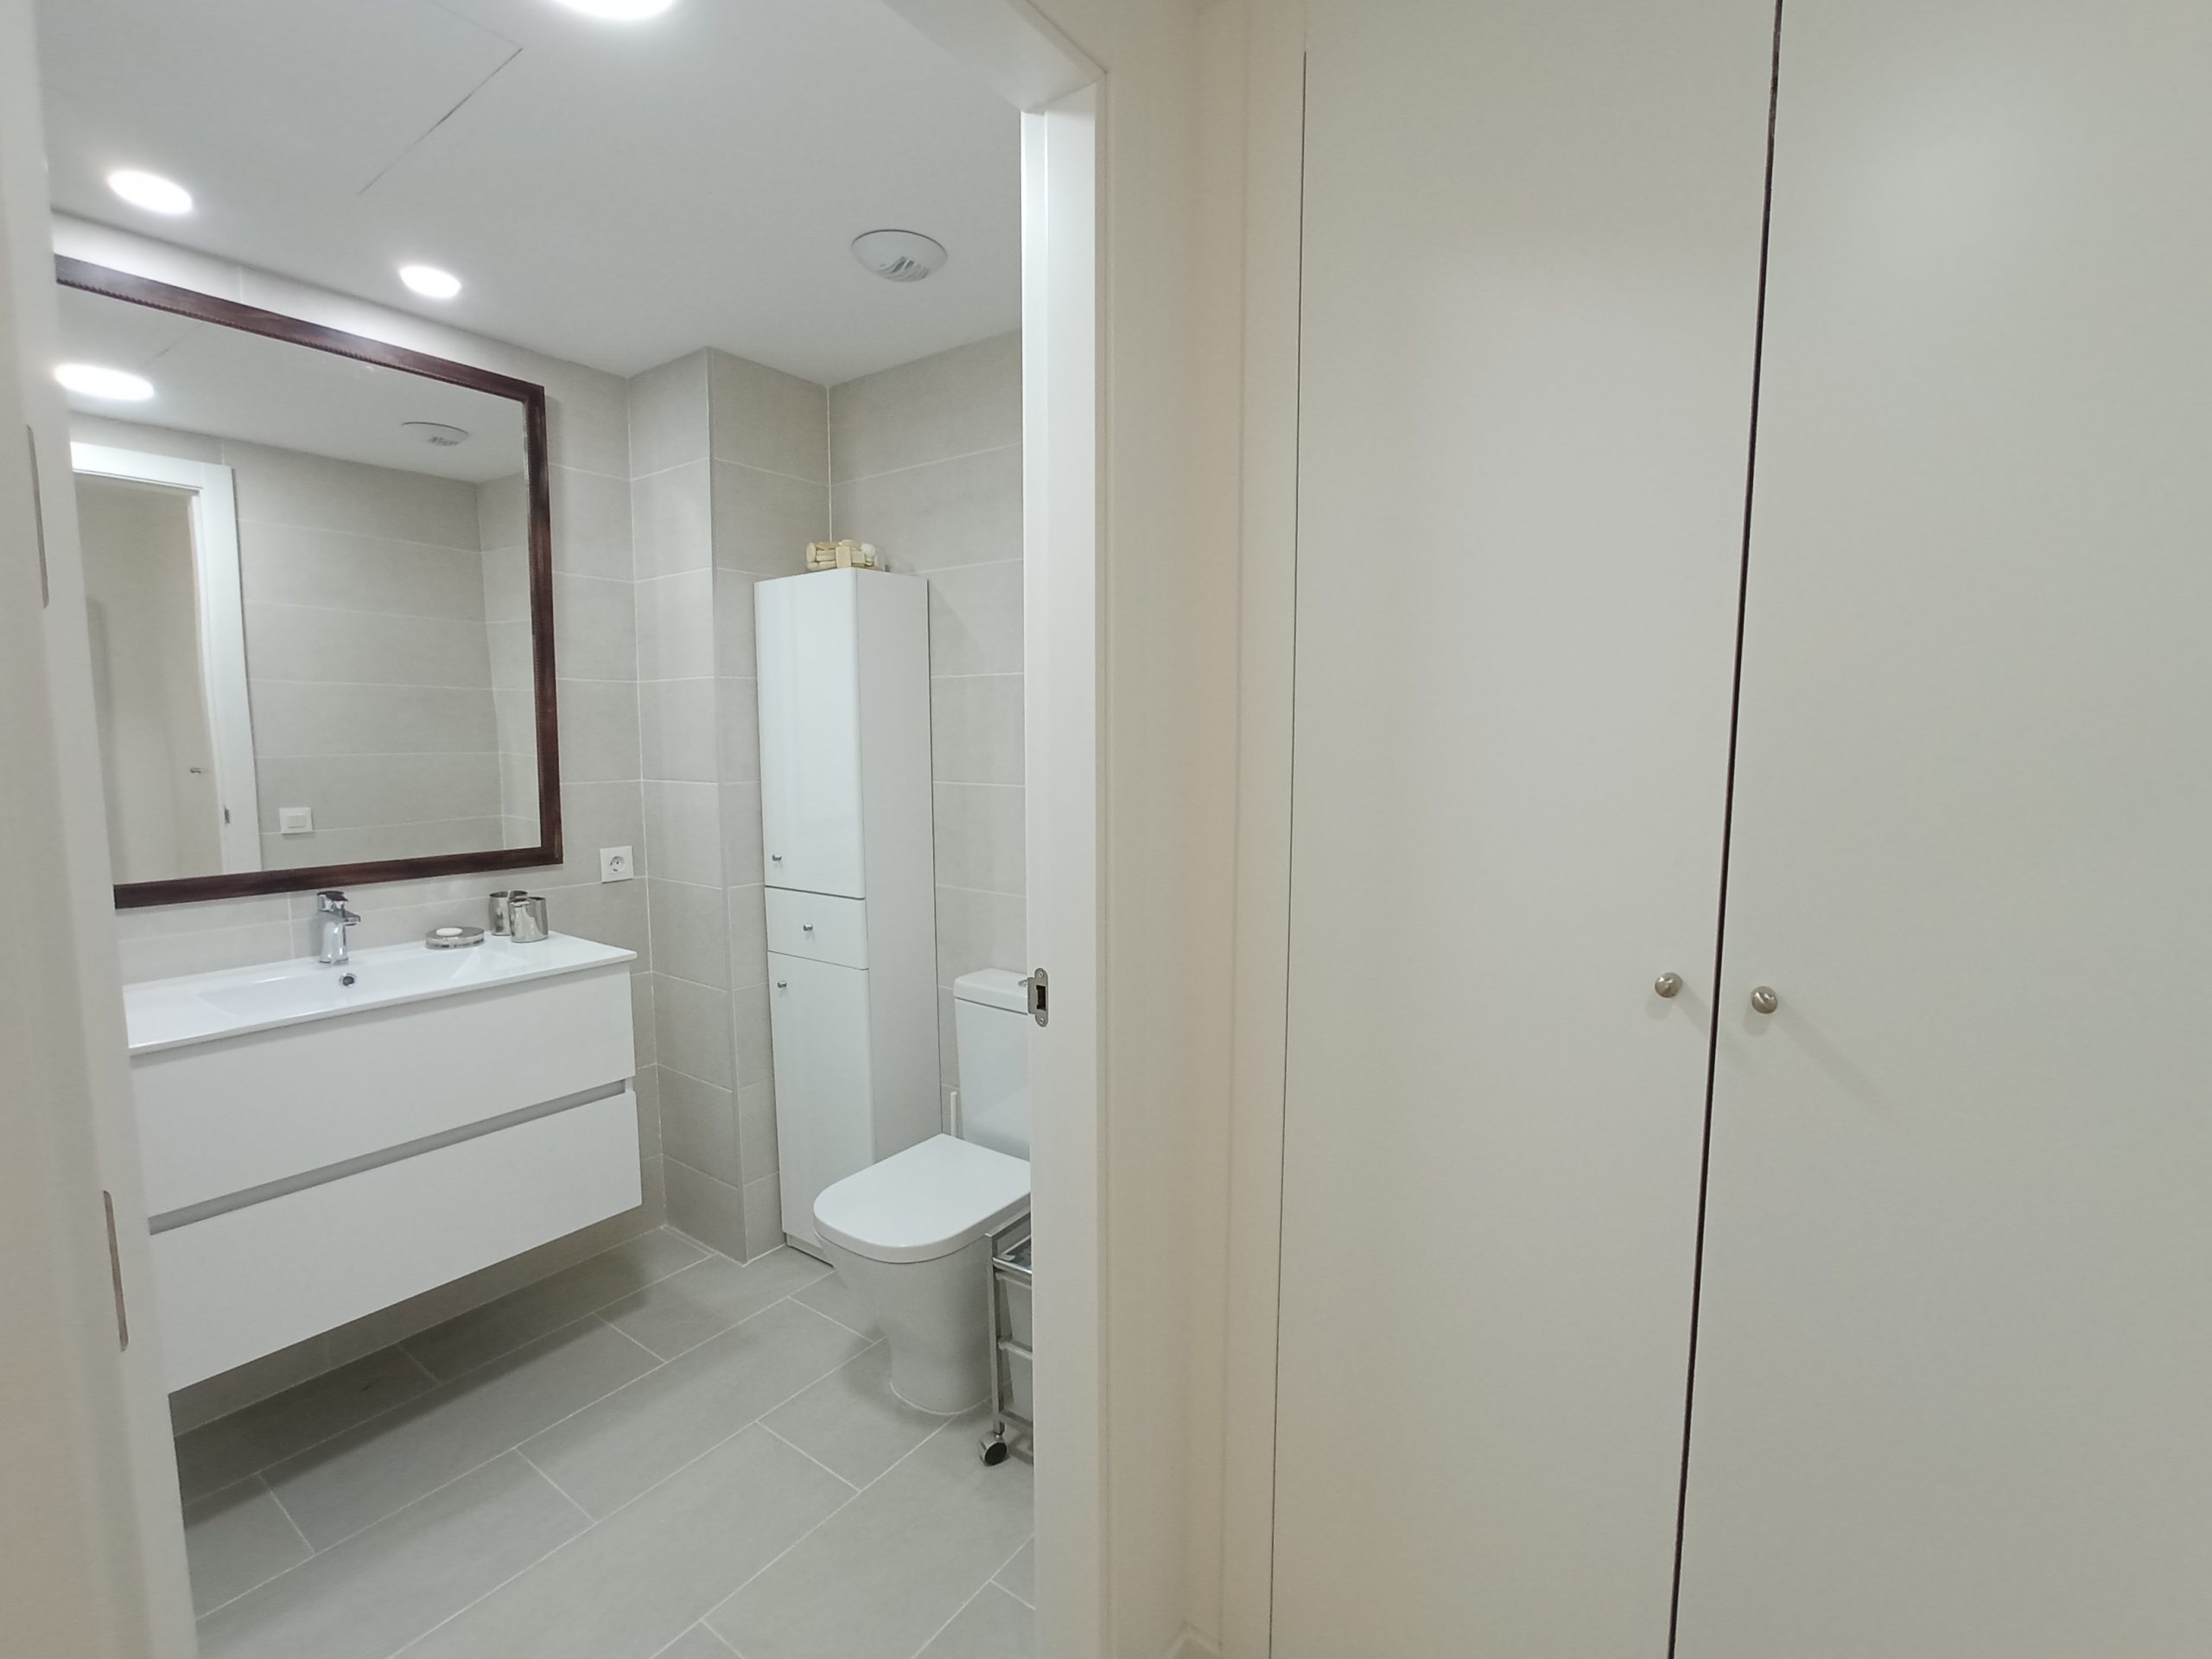 apartment for rent in valencia - bathroom